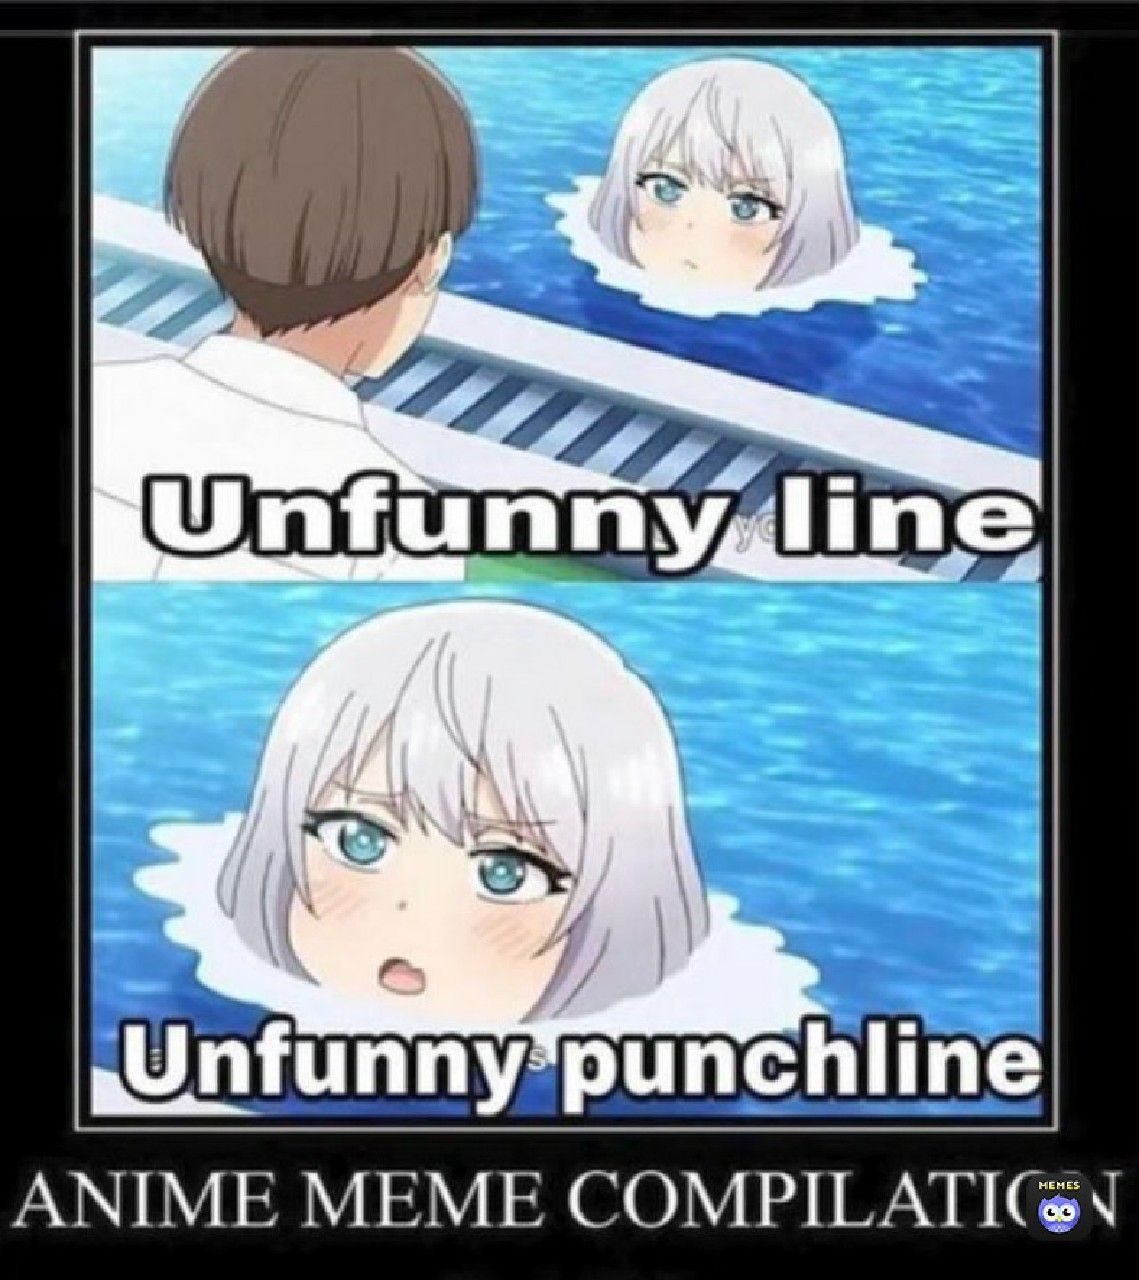 Cringe Anime Memes That Will Cause Pain #memes #anime #animememes - YouTube